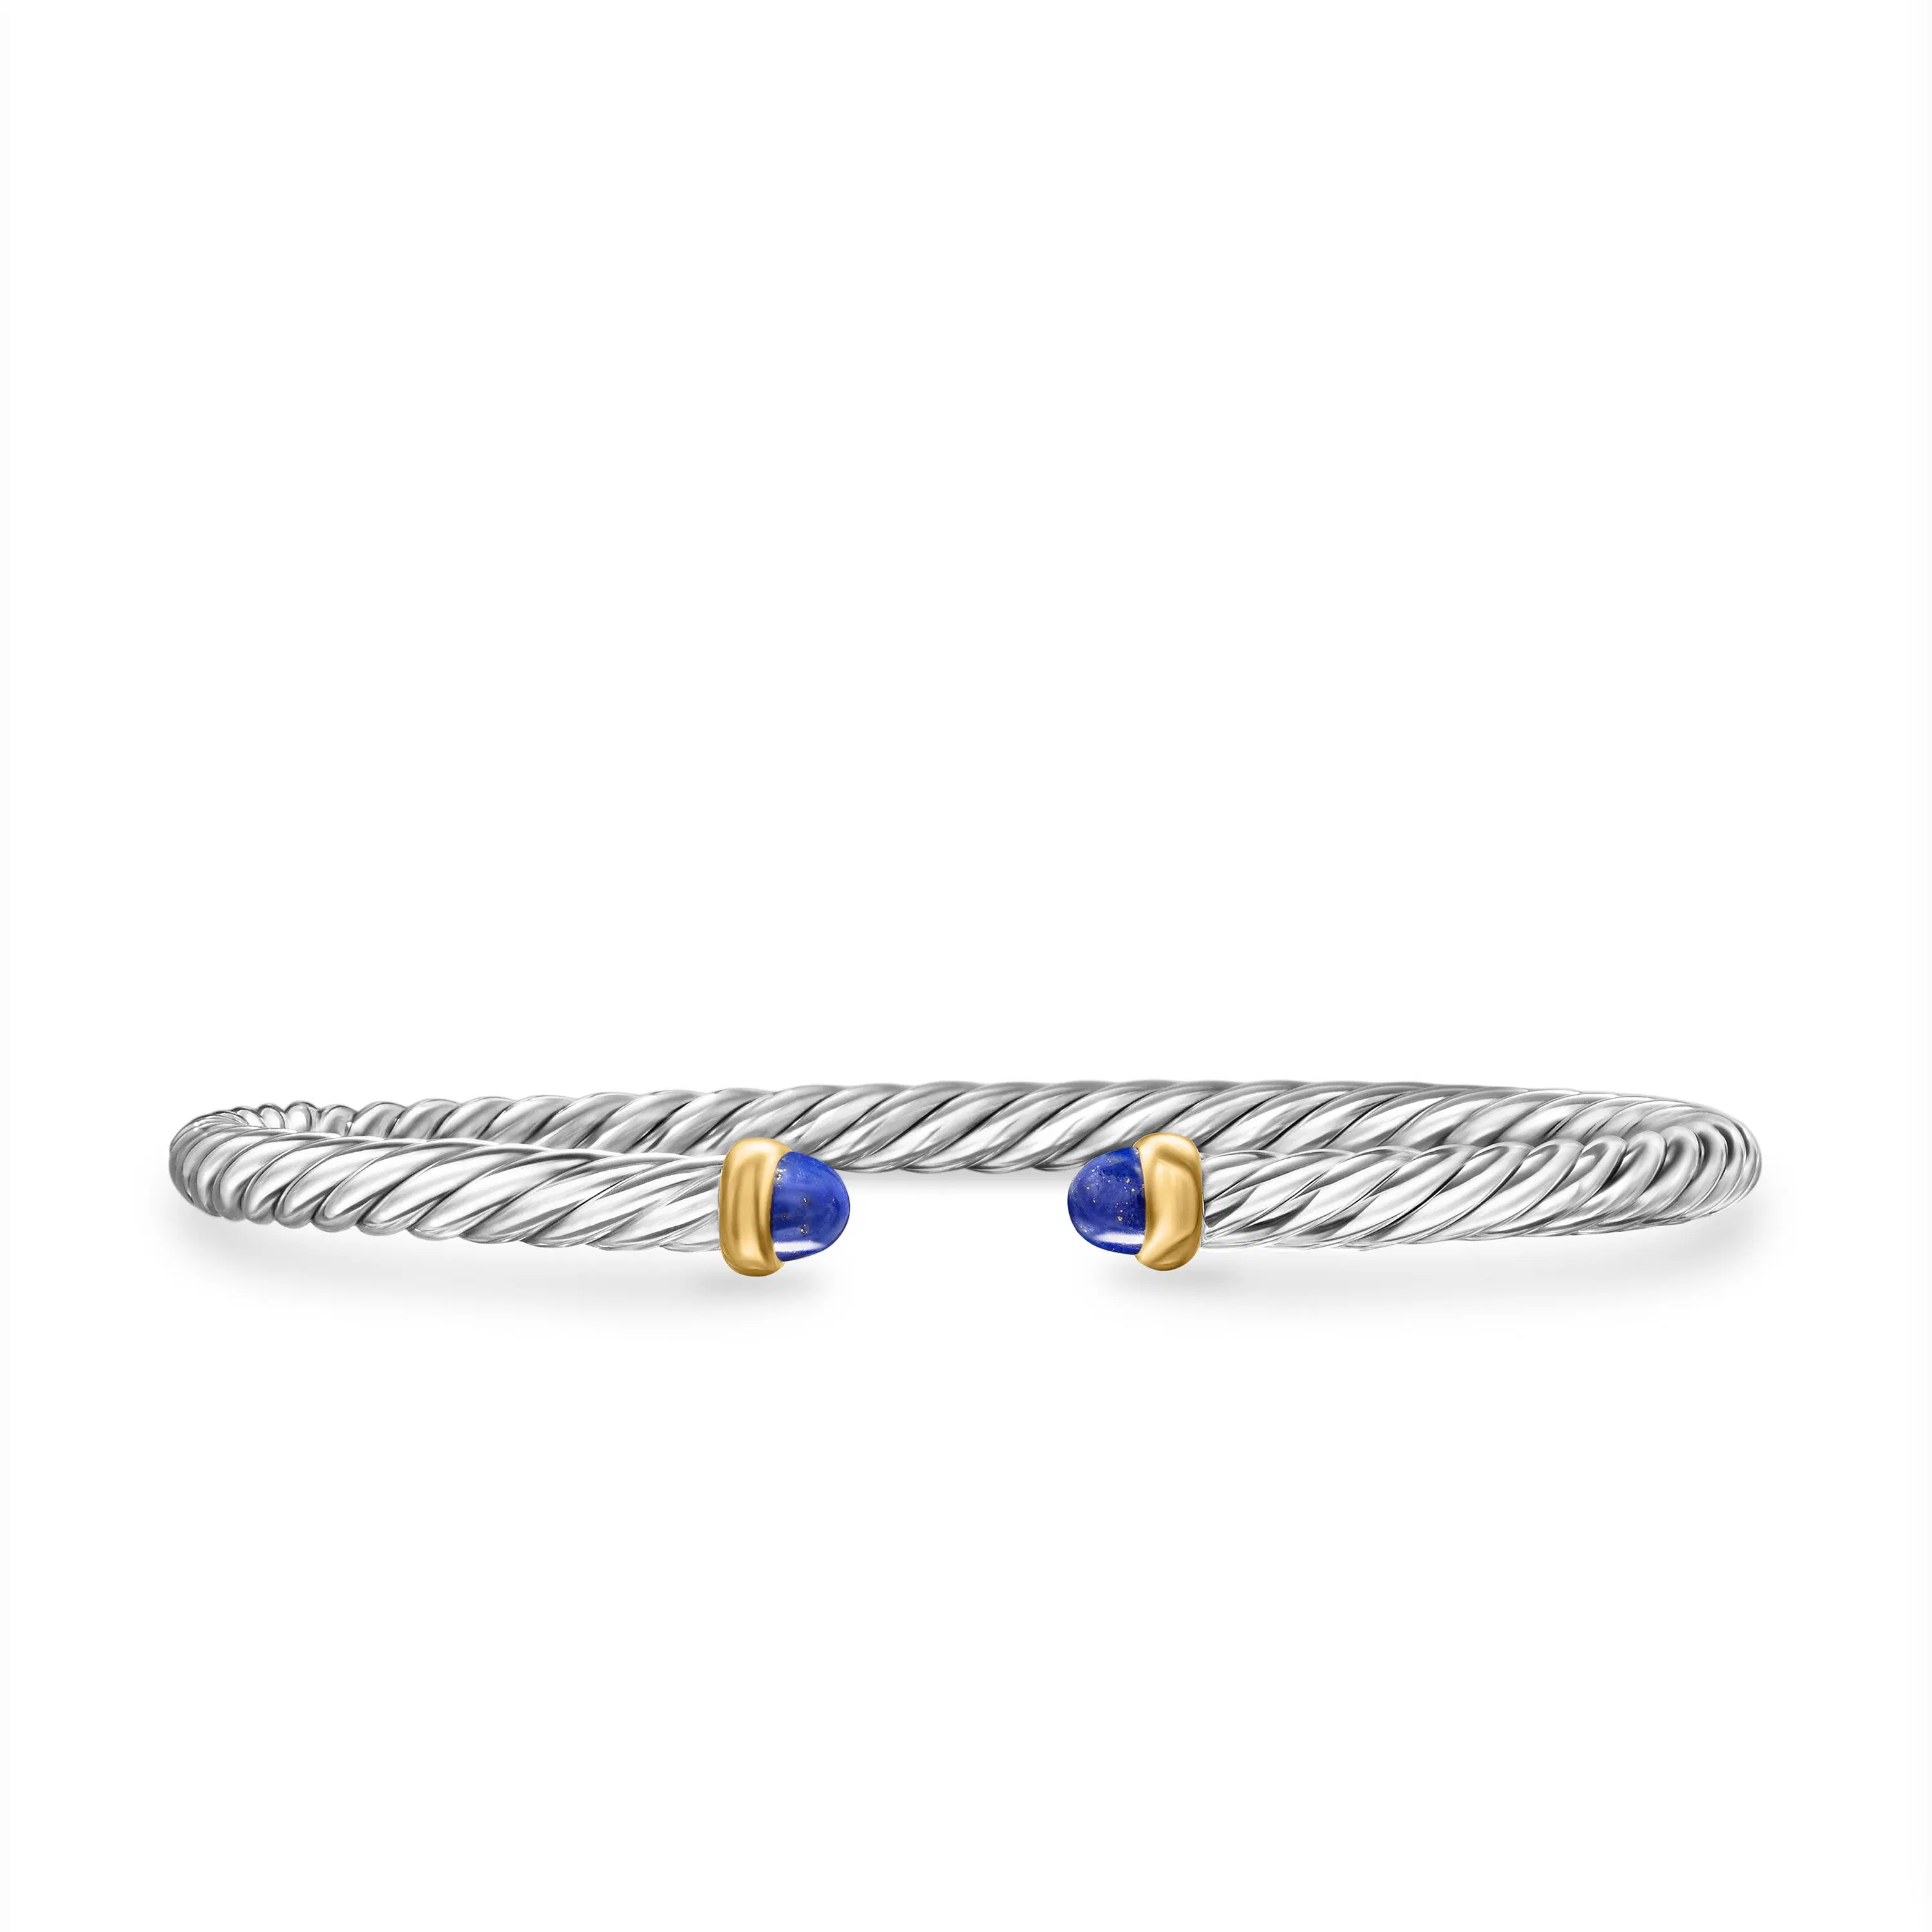 David Yurman Cable Flex Sterling Silver Bracelet with Lapis, Size Large 0